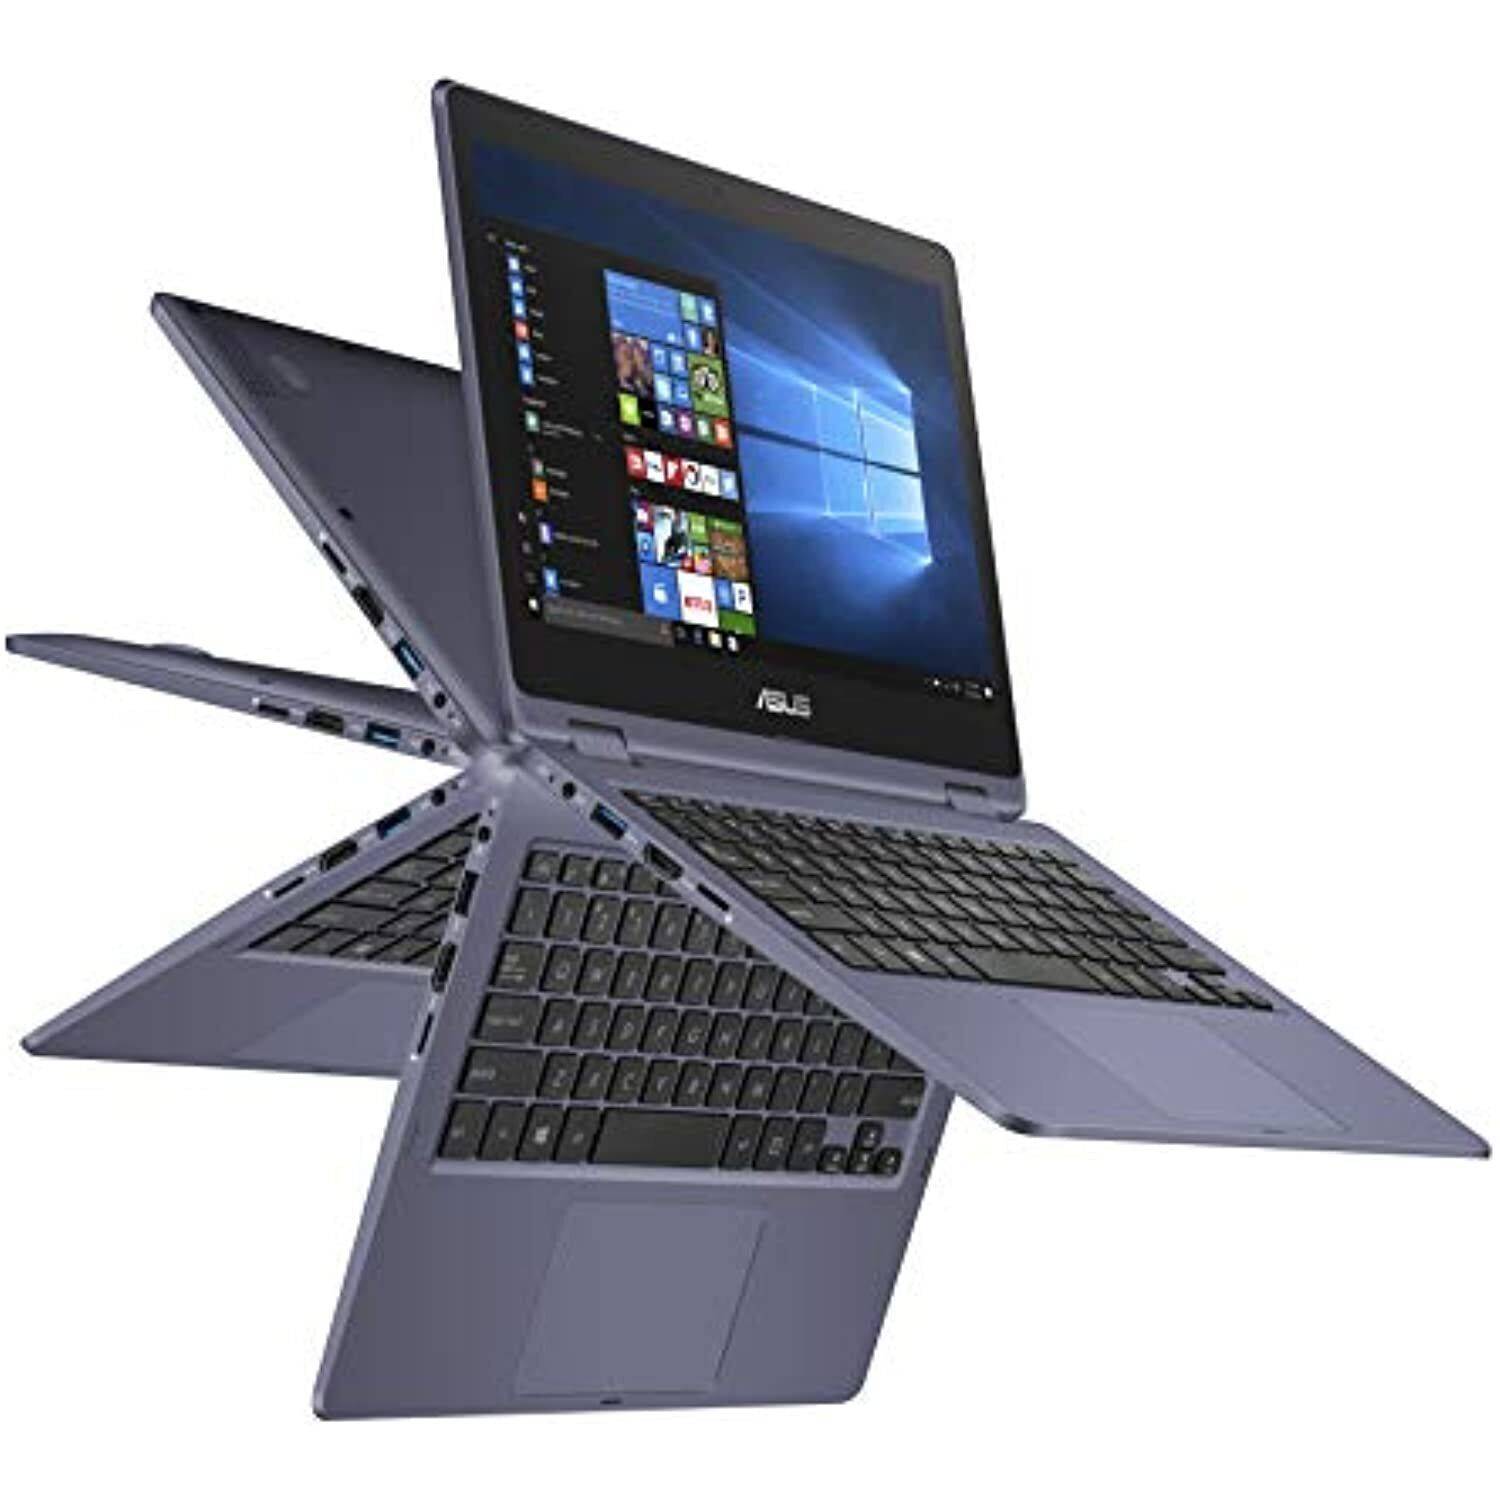 Asus VivoBook Flip 11.6 Touchscreen Laptop N3350 4GB 64GB Win 10 J202Na-Dh01T